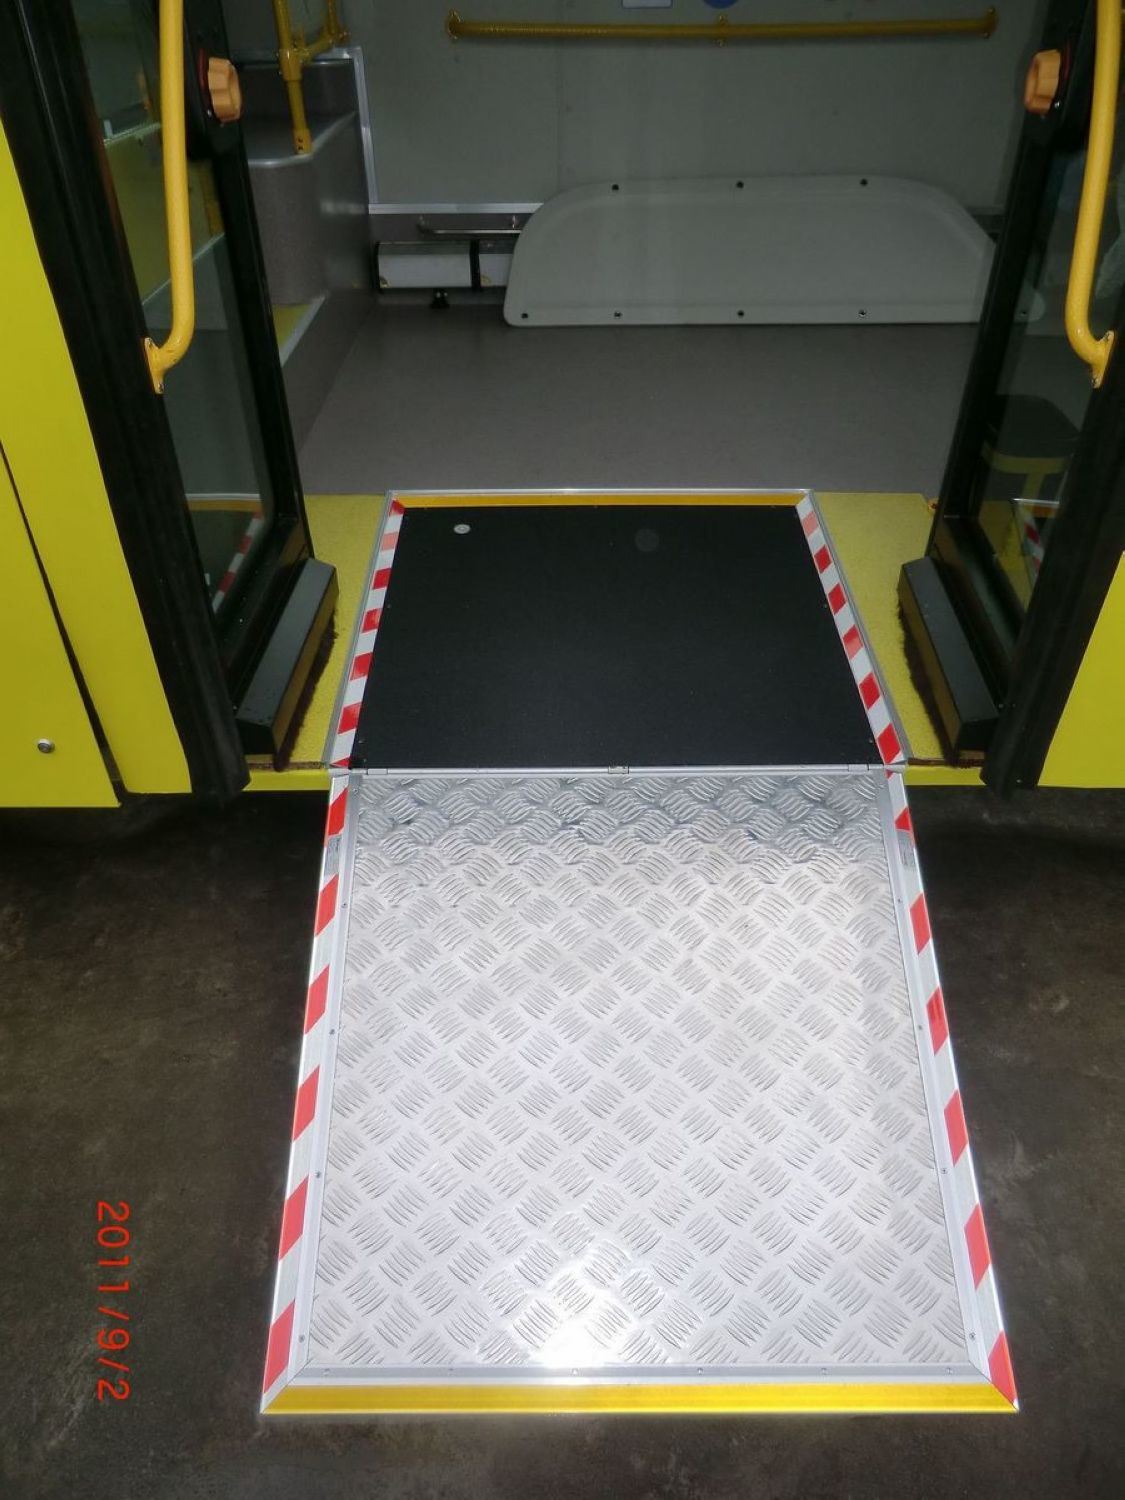 Manual Loading Ramp, Manual Folding Ramp for Wheelchair Passanger (FMWR-1A)